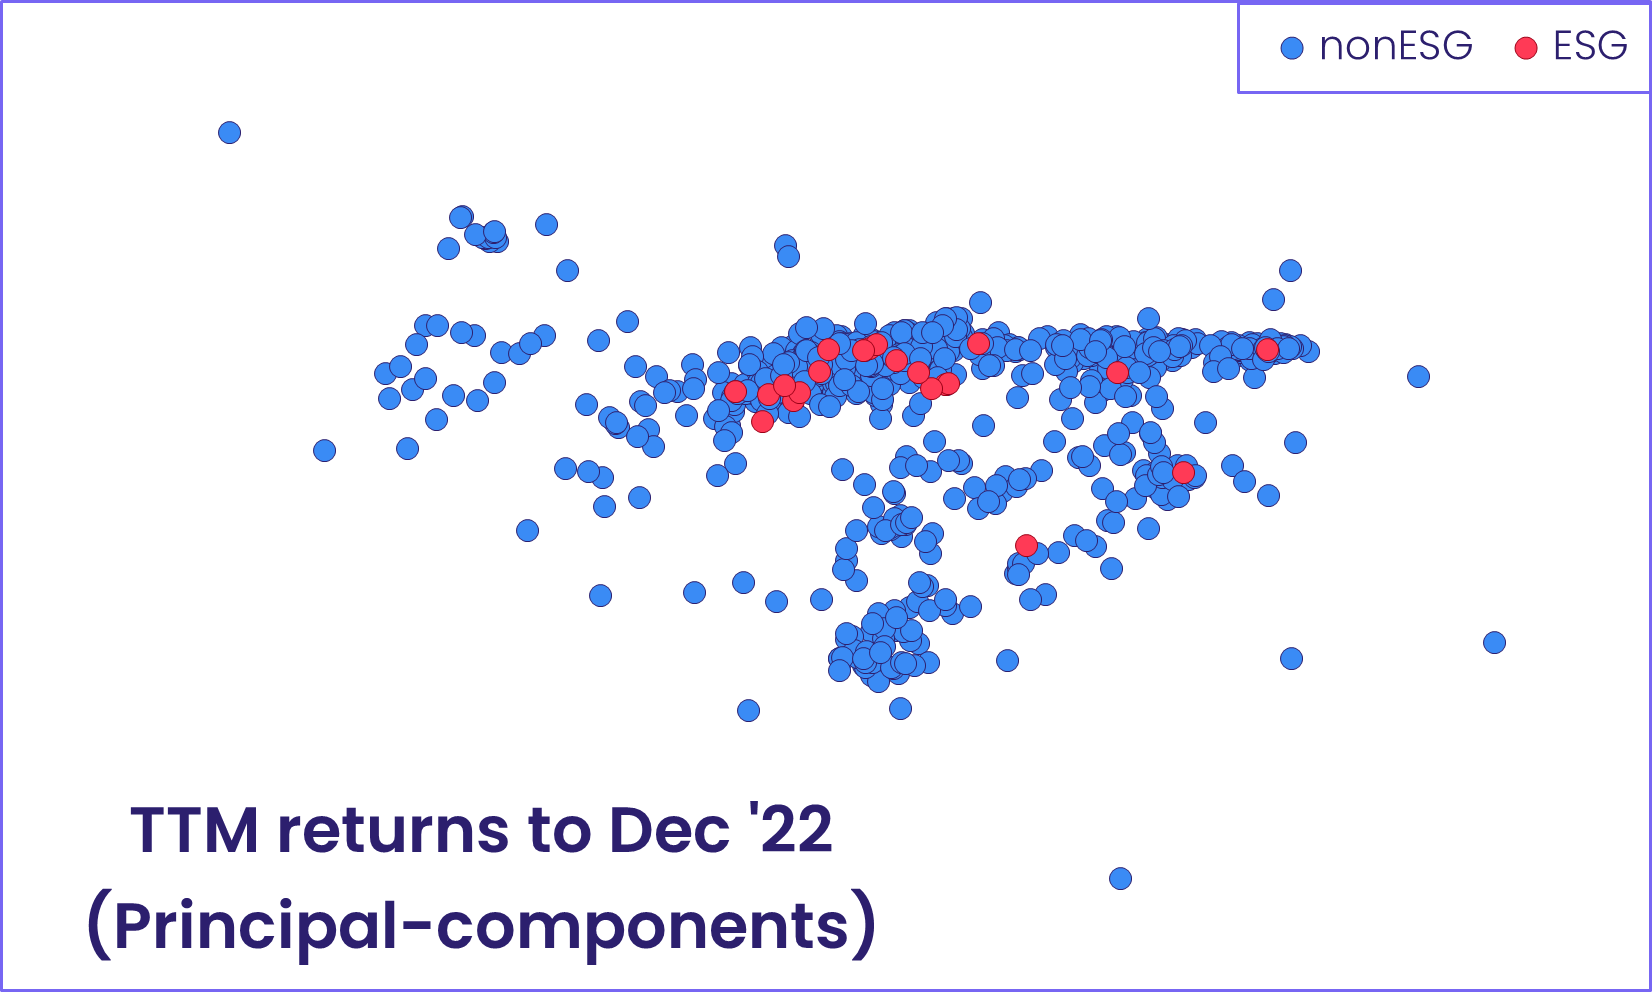 Chart representing 'TTM returns to December 22 Principal-components'